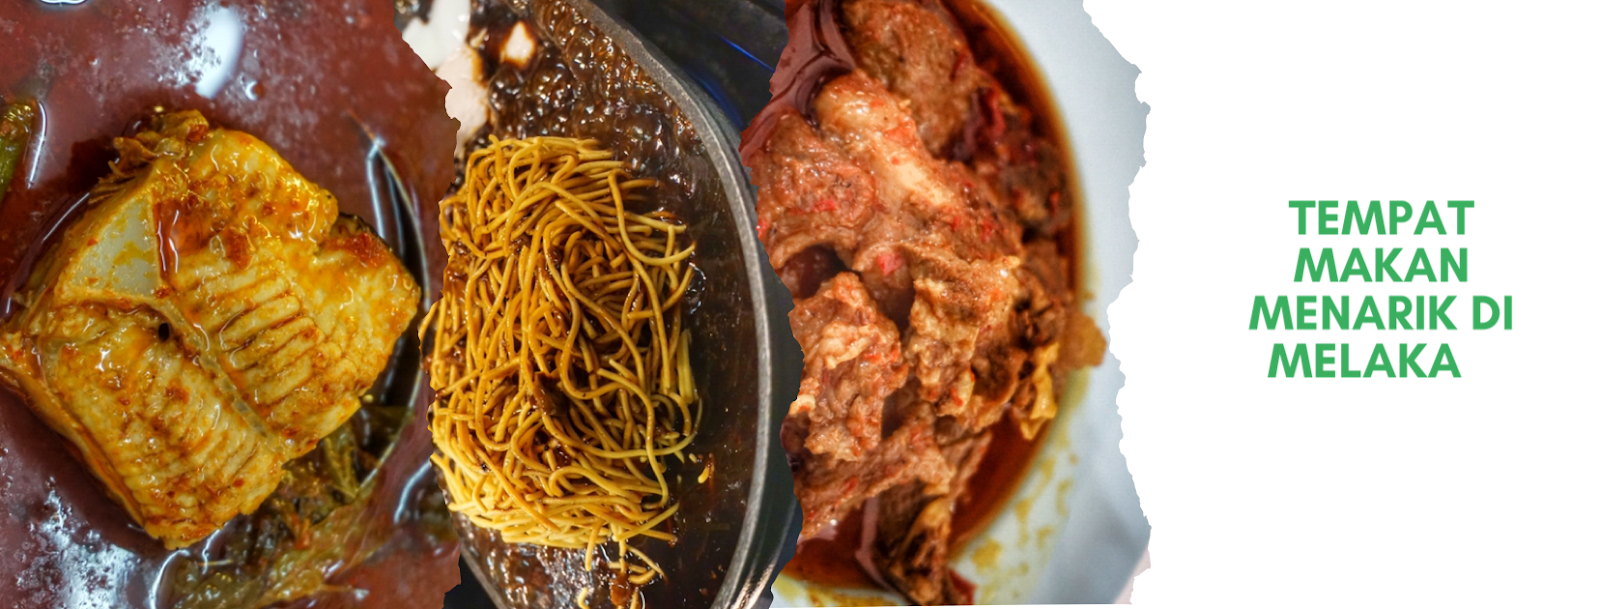 Tempat Makan Malam Di Melaka / Lo Qos Uptown Tempat Makan Baru Yang